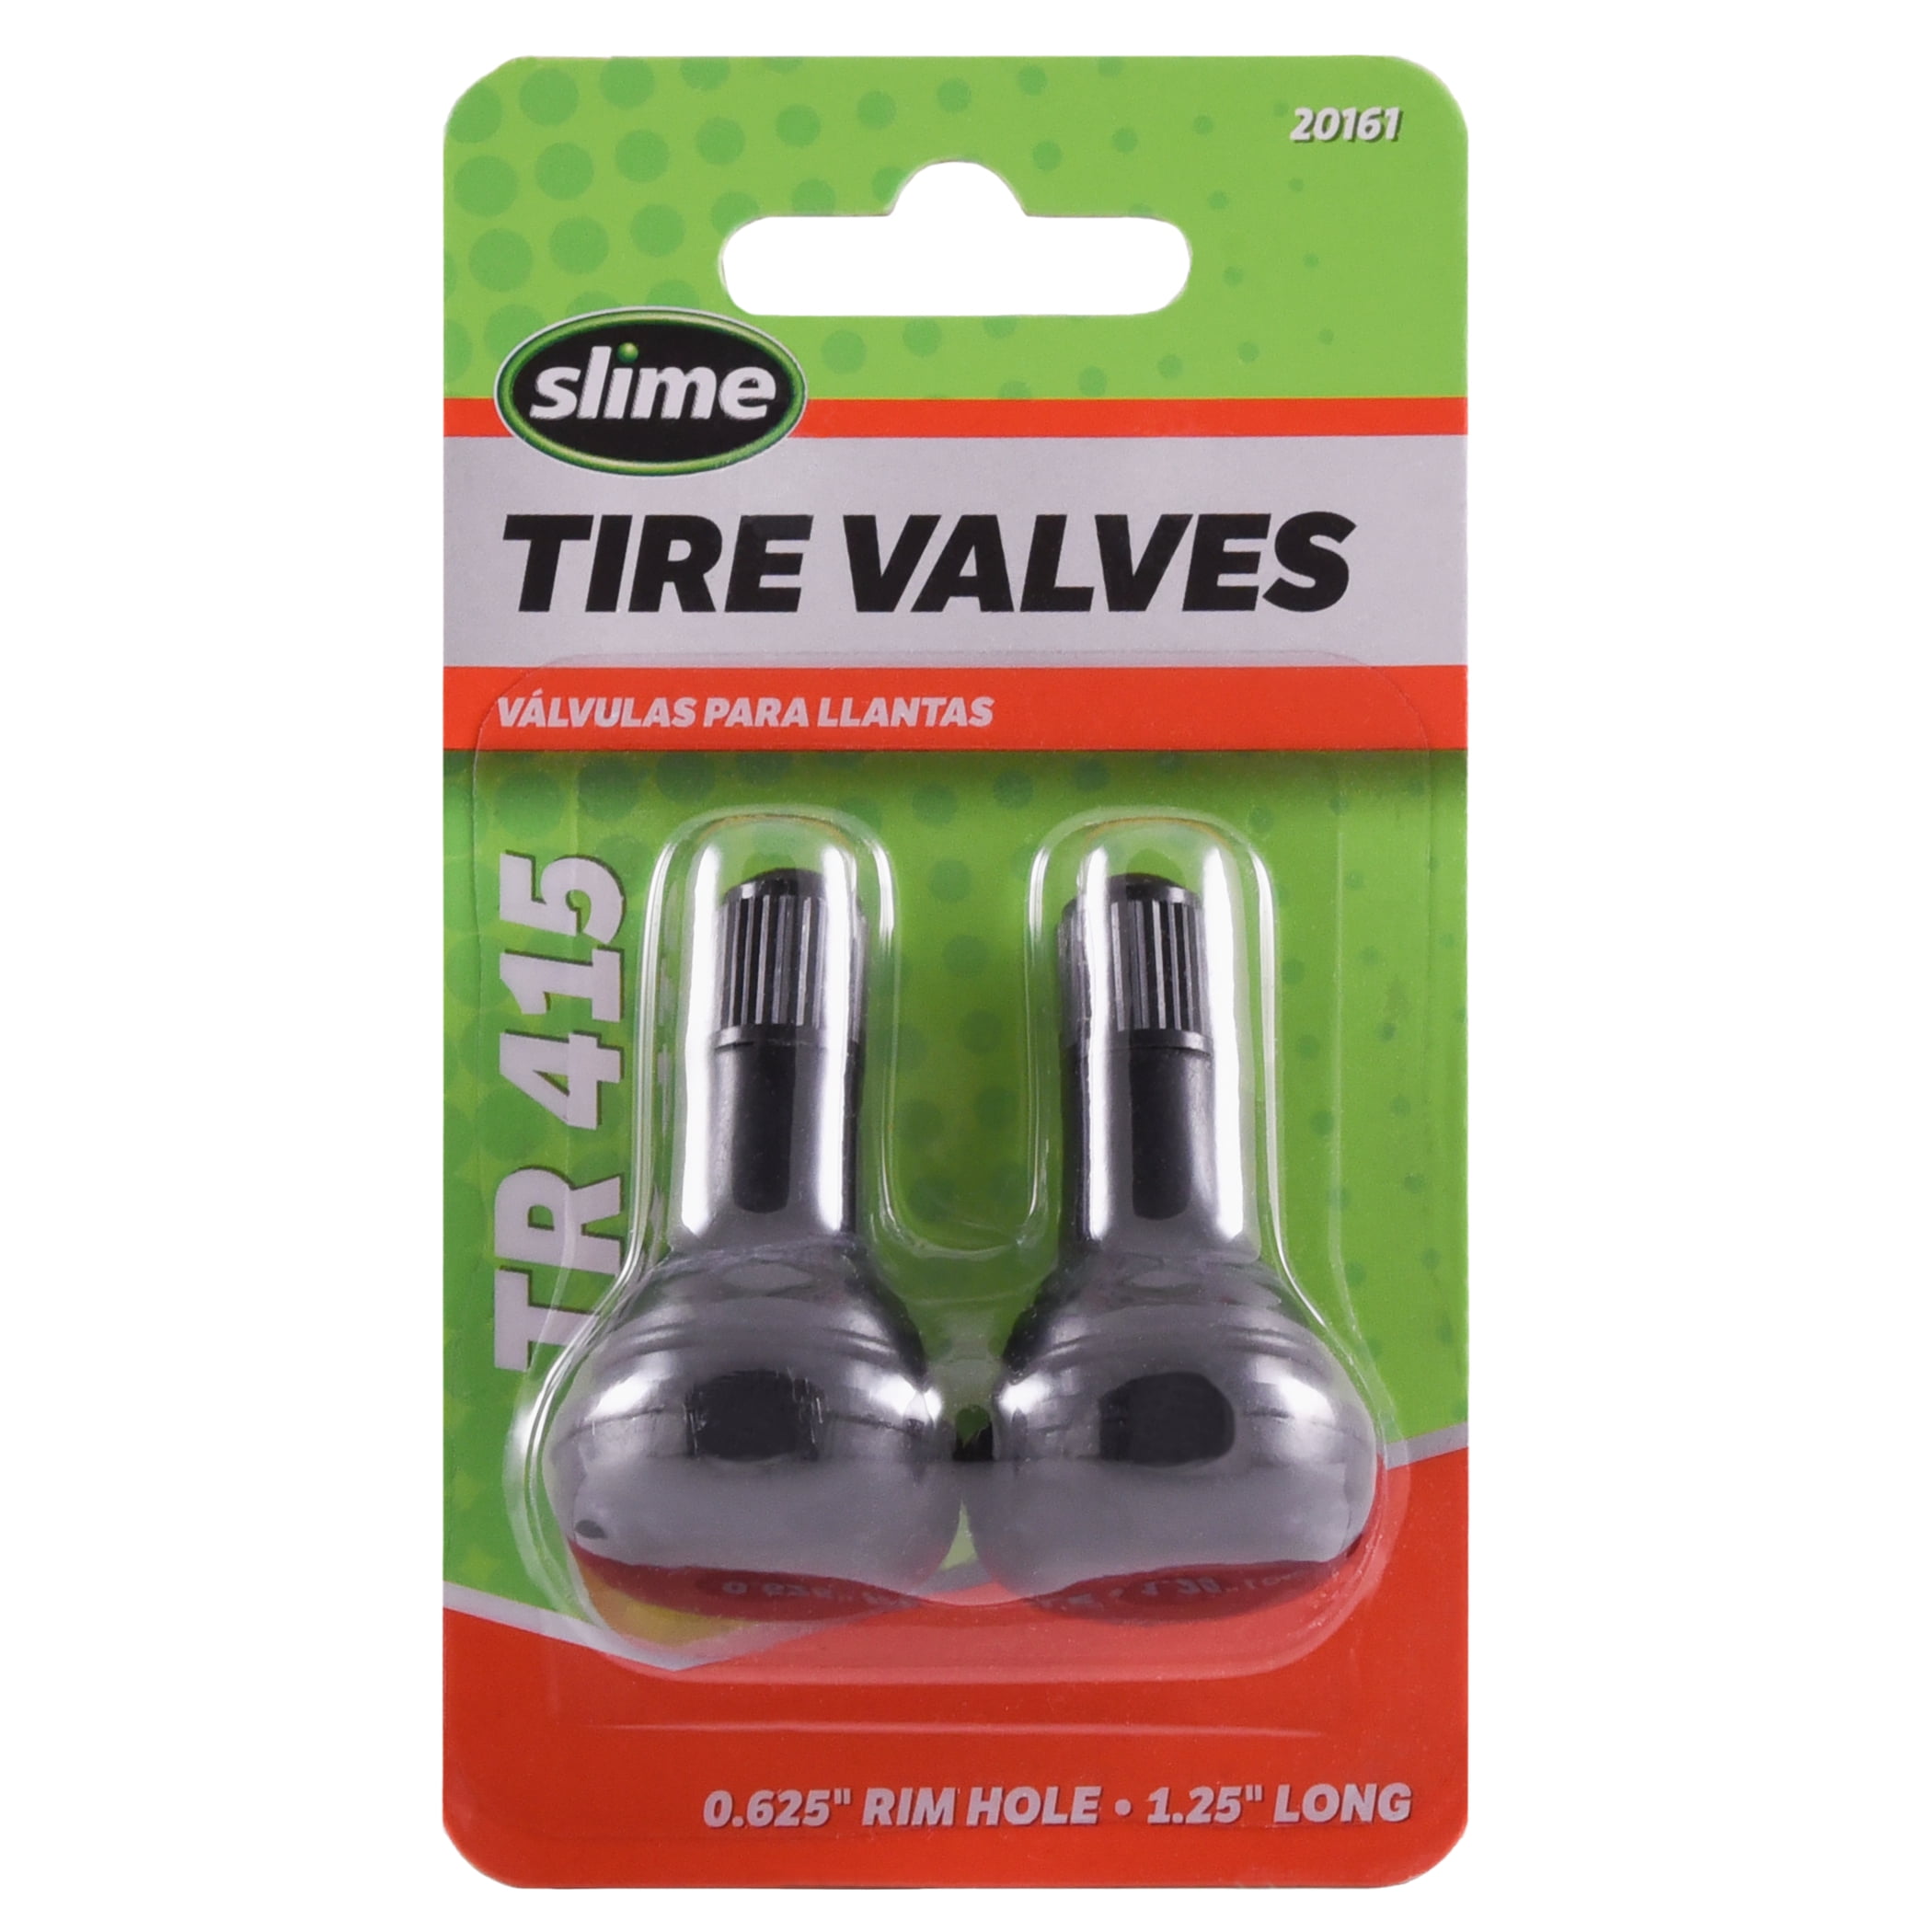 Slime Tubeless Tire Valves Replace TR415 tire valves - 20161